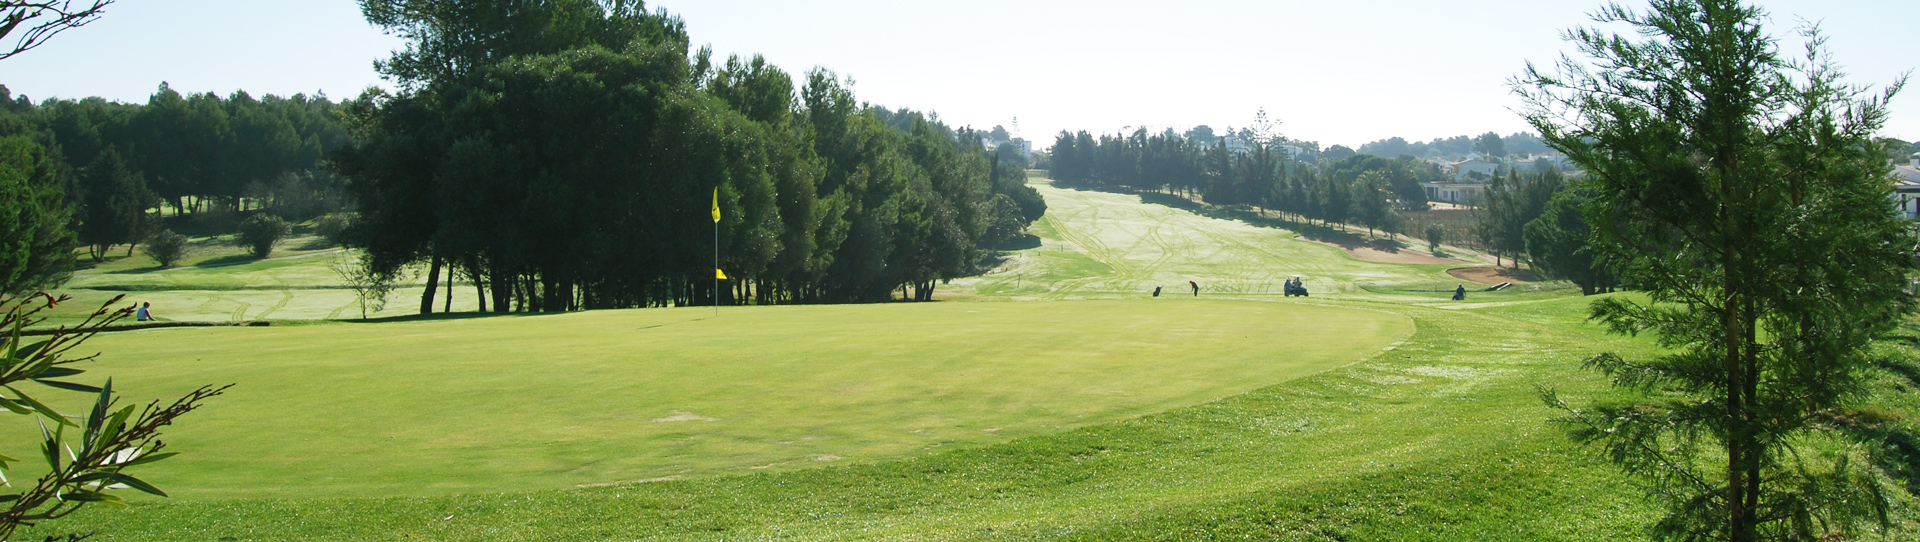 Portugal golf holidays - Pestana Golf | Buggy Included - Photo 3